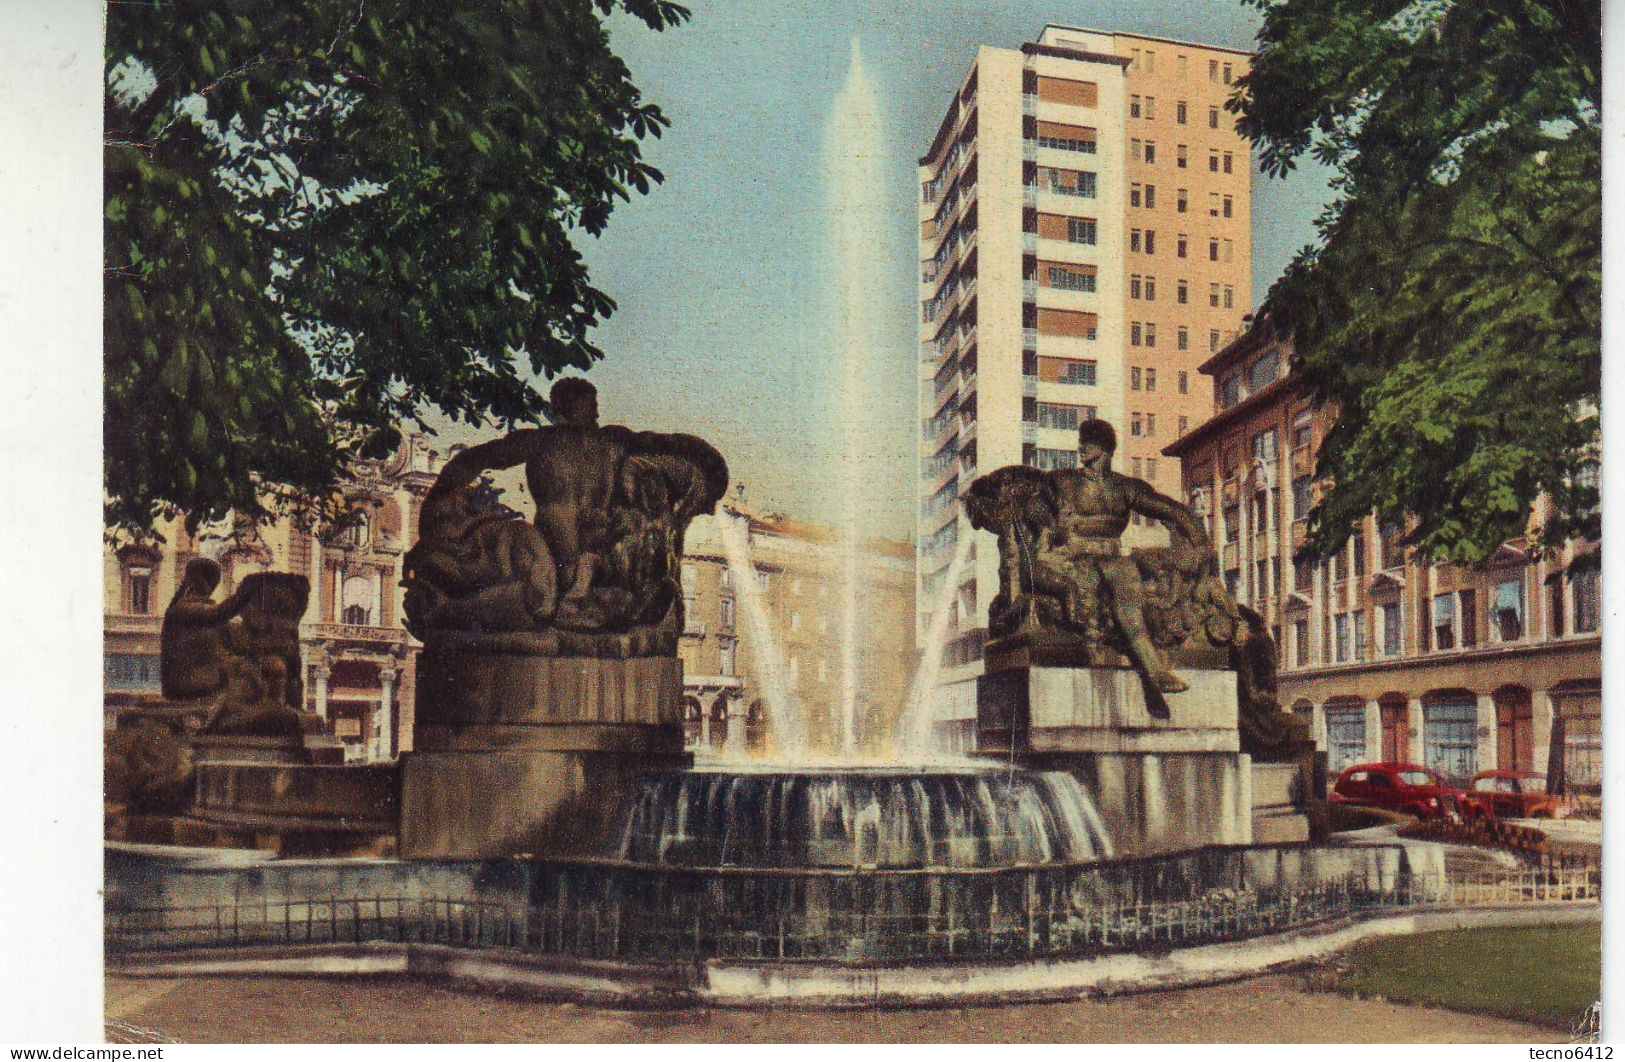 Torino - Fontana Angelica - Viaggiata - Andere Monumente & Gebäude